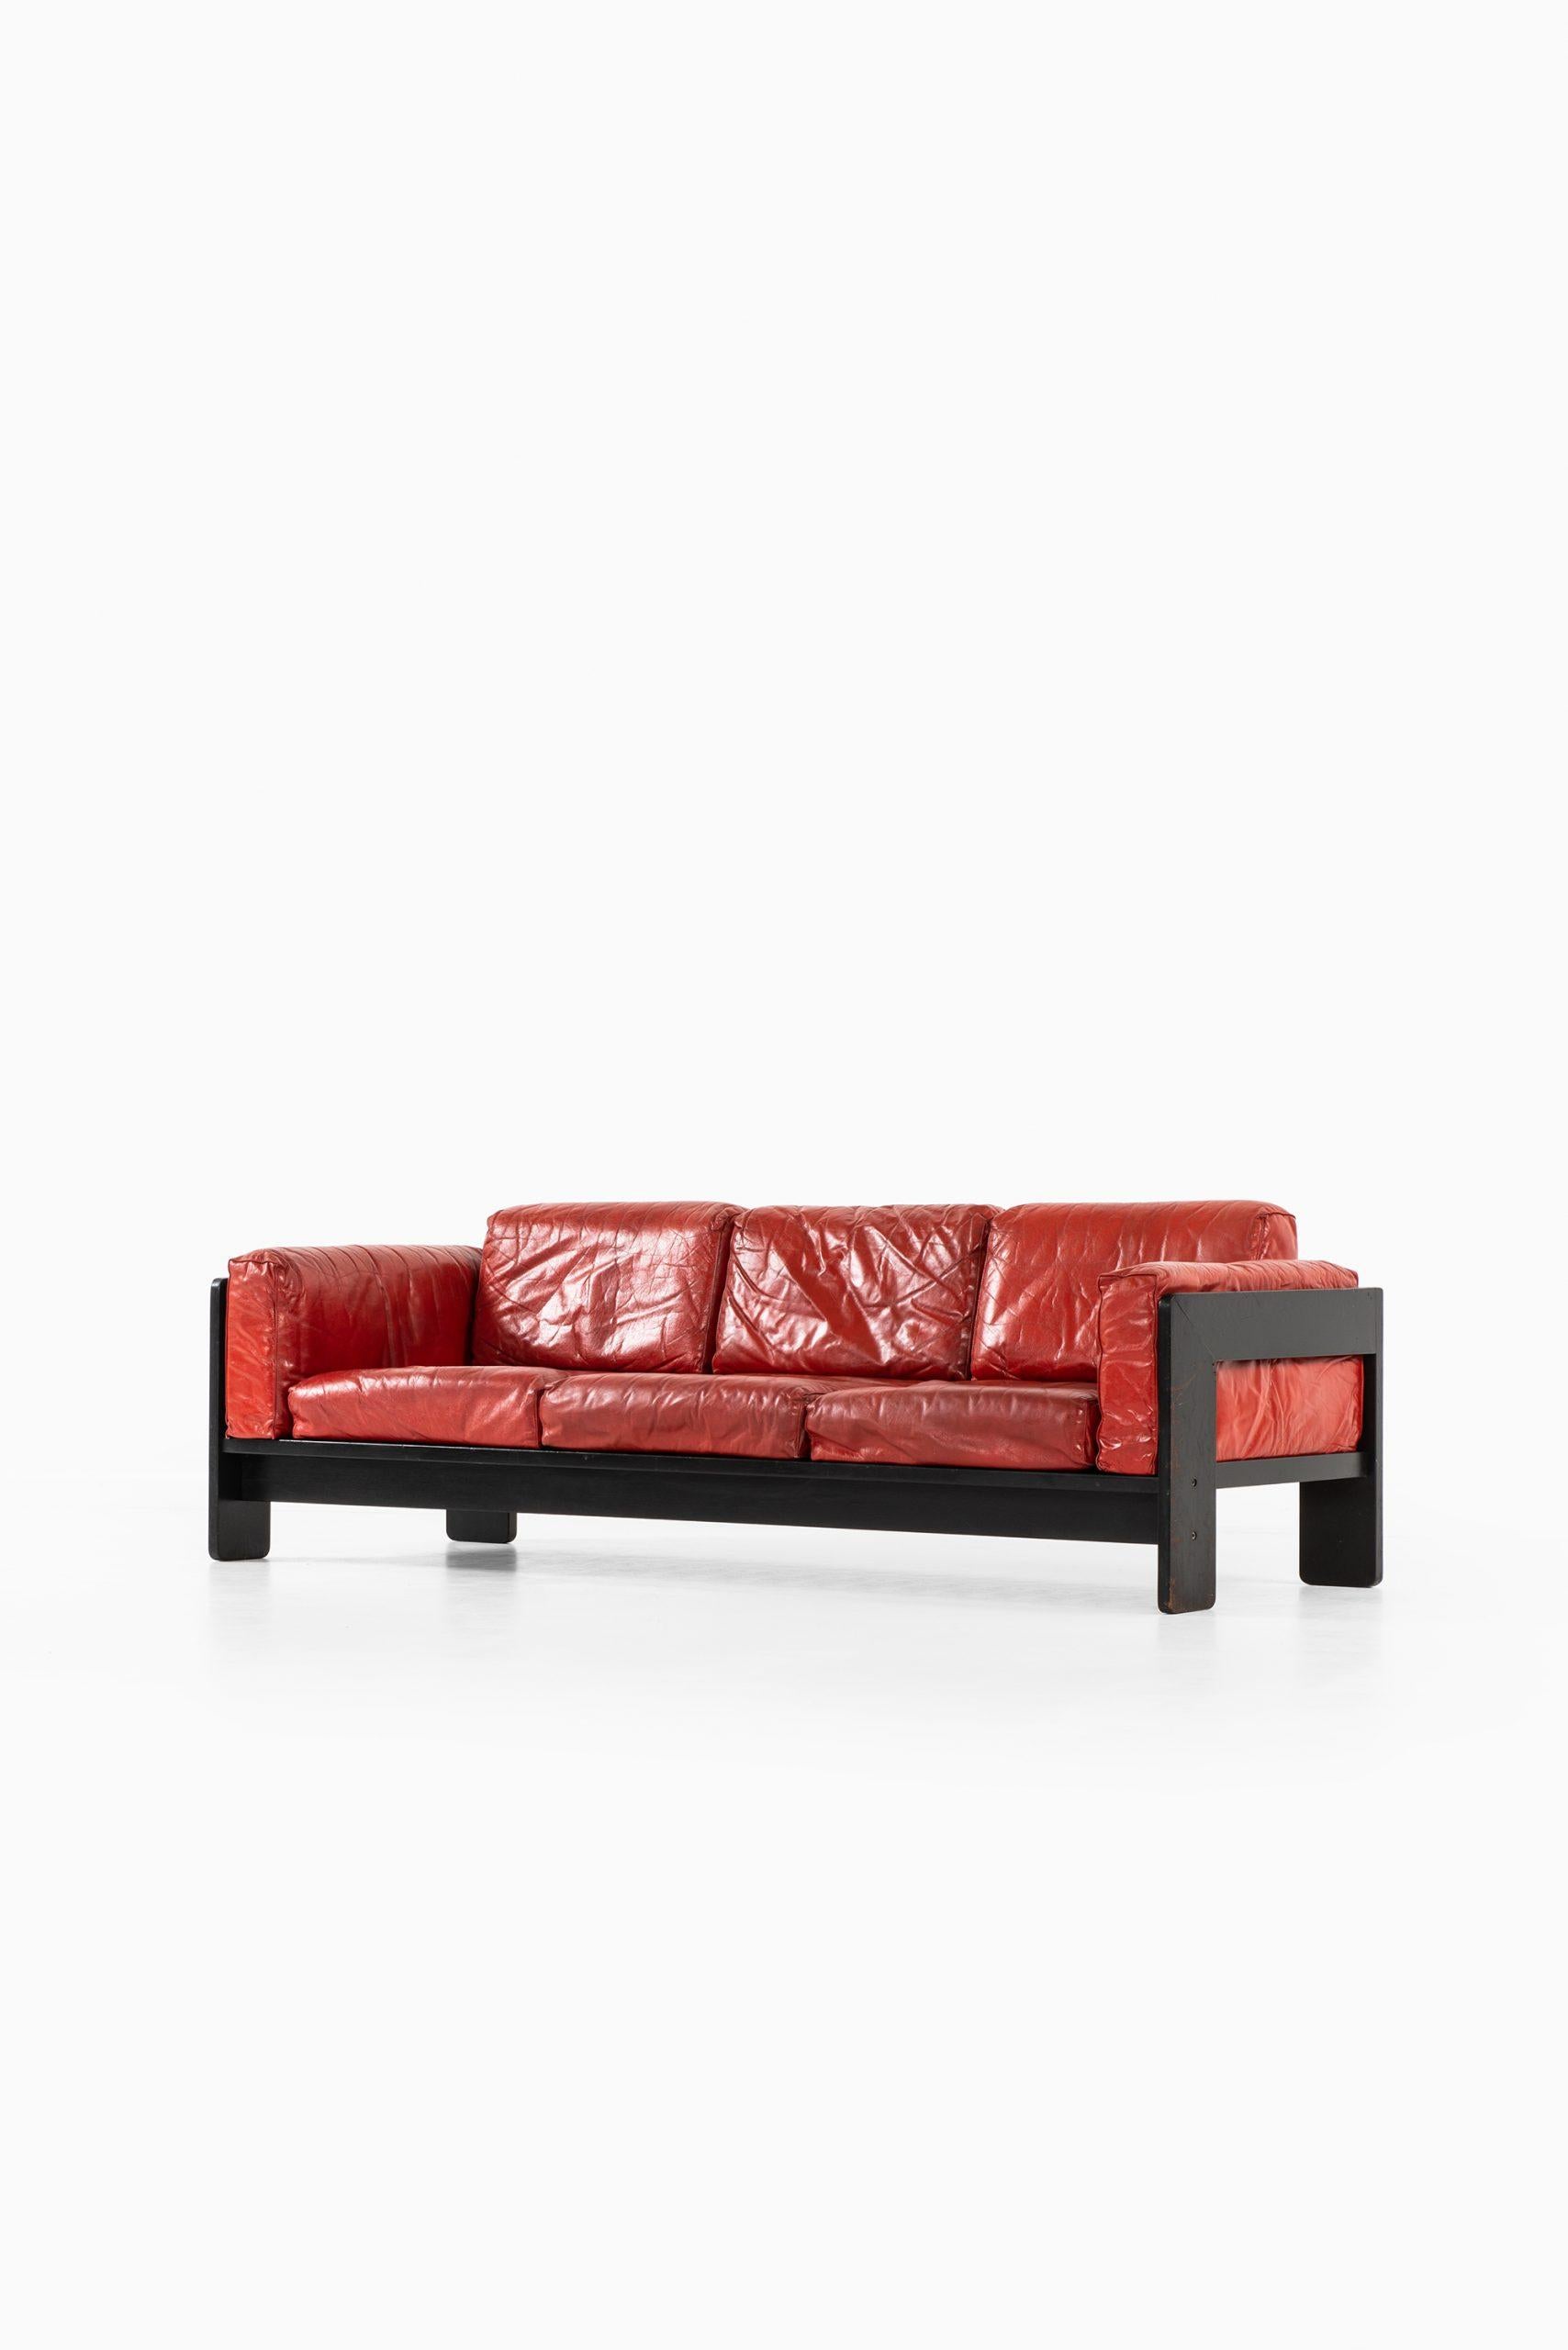 Scandinavian Modern Tobia Scarpa Sofa Model Bastiano Produced by Haimi in Finland For Sale